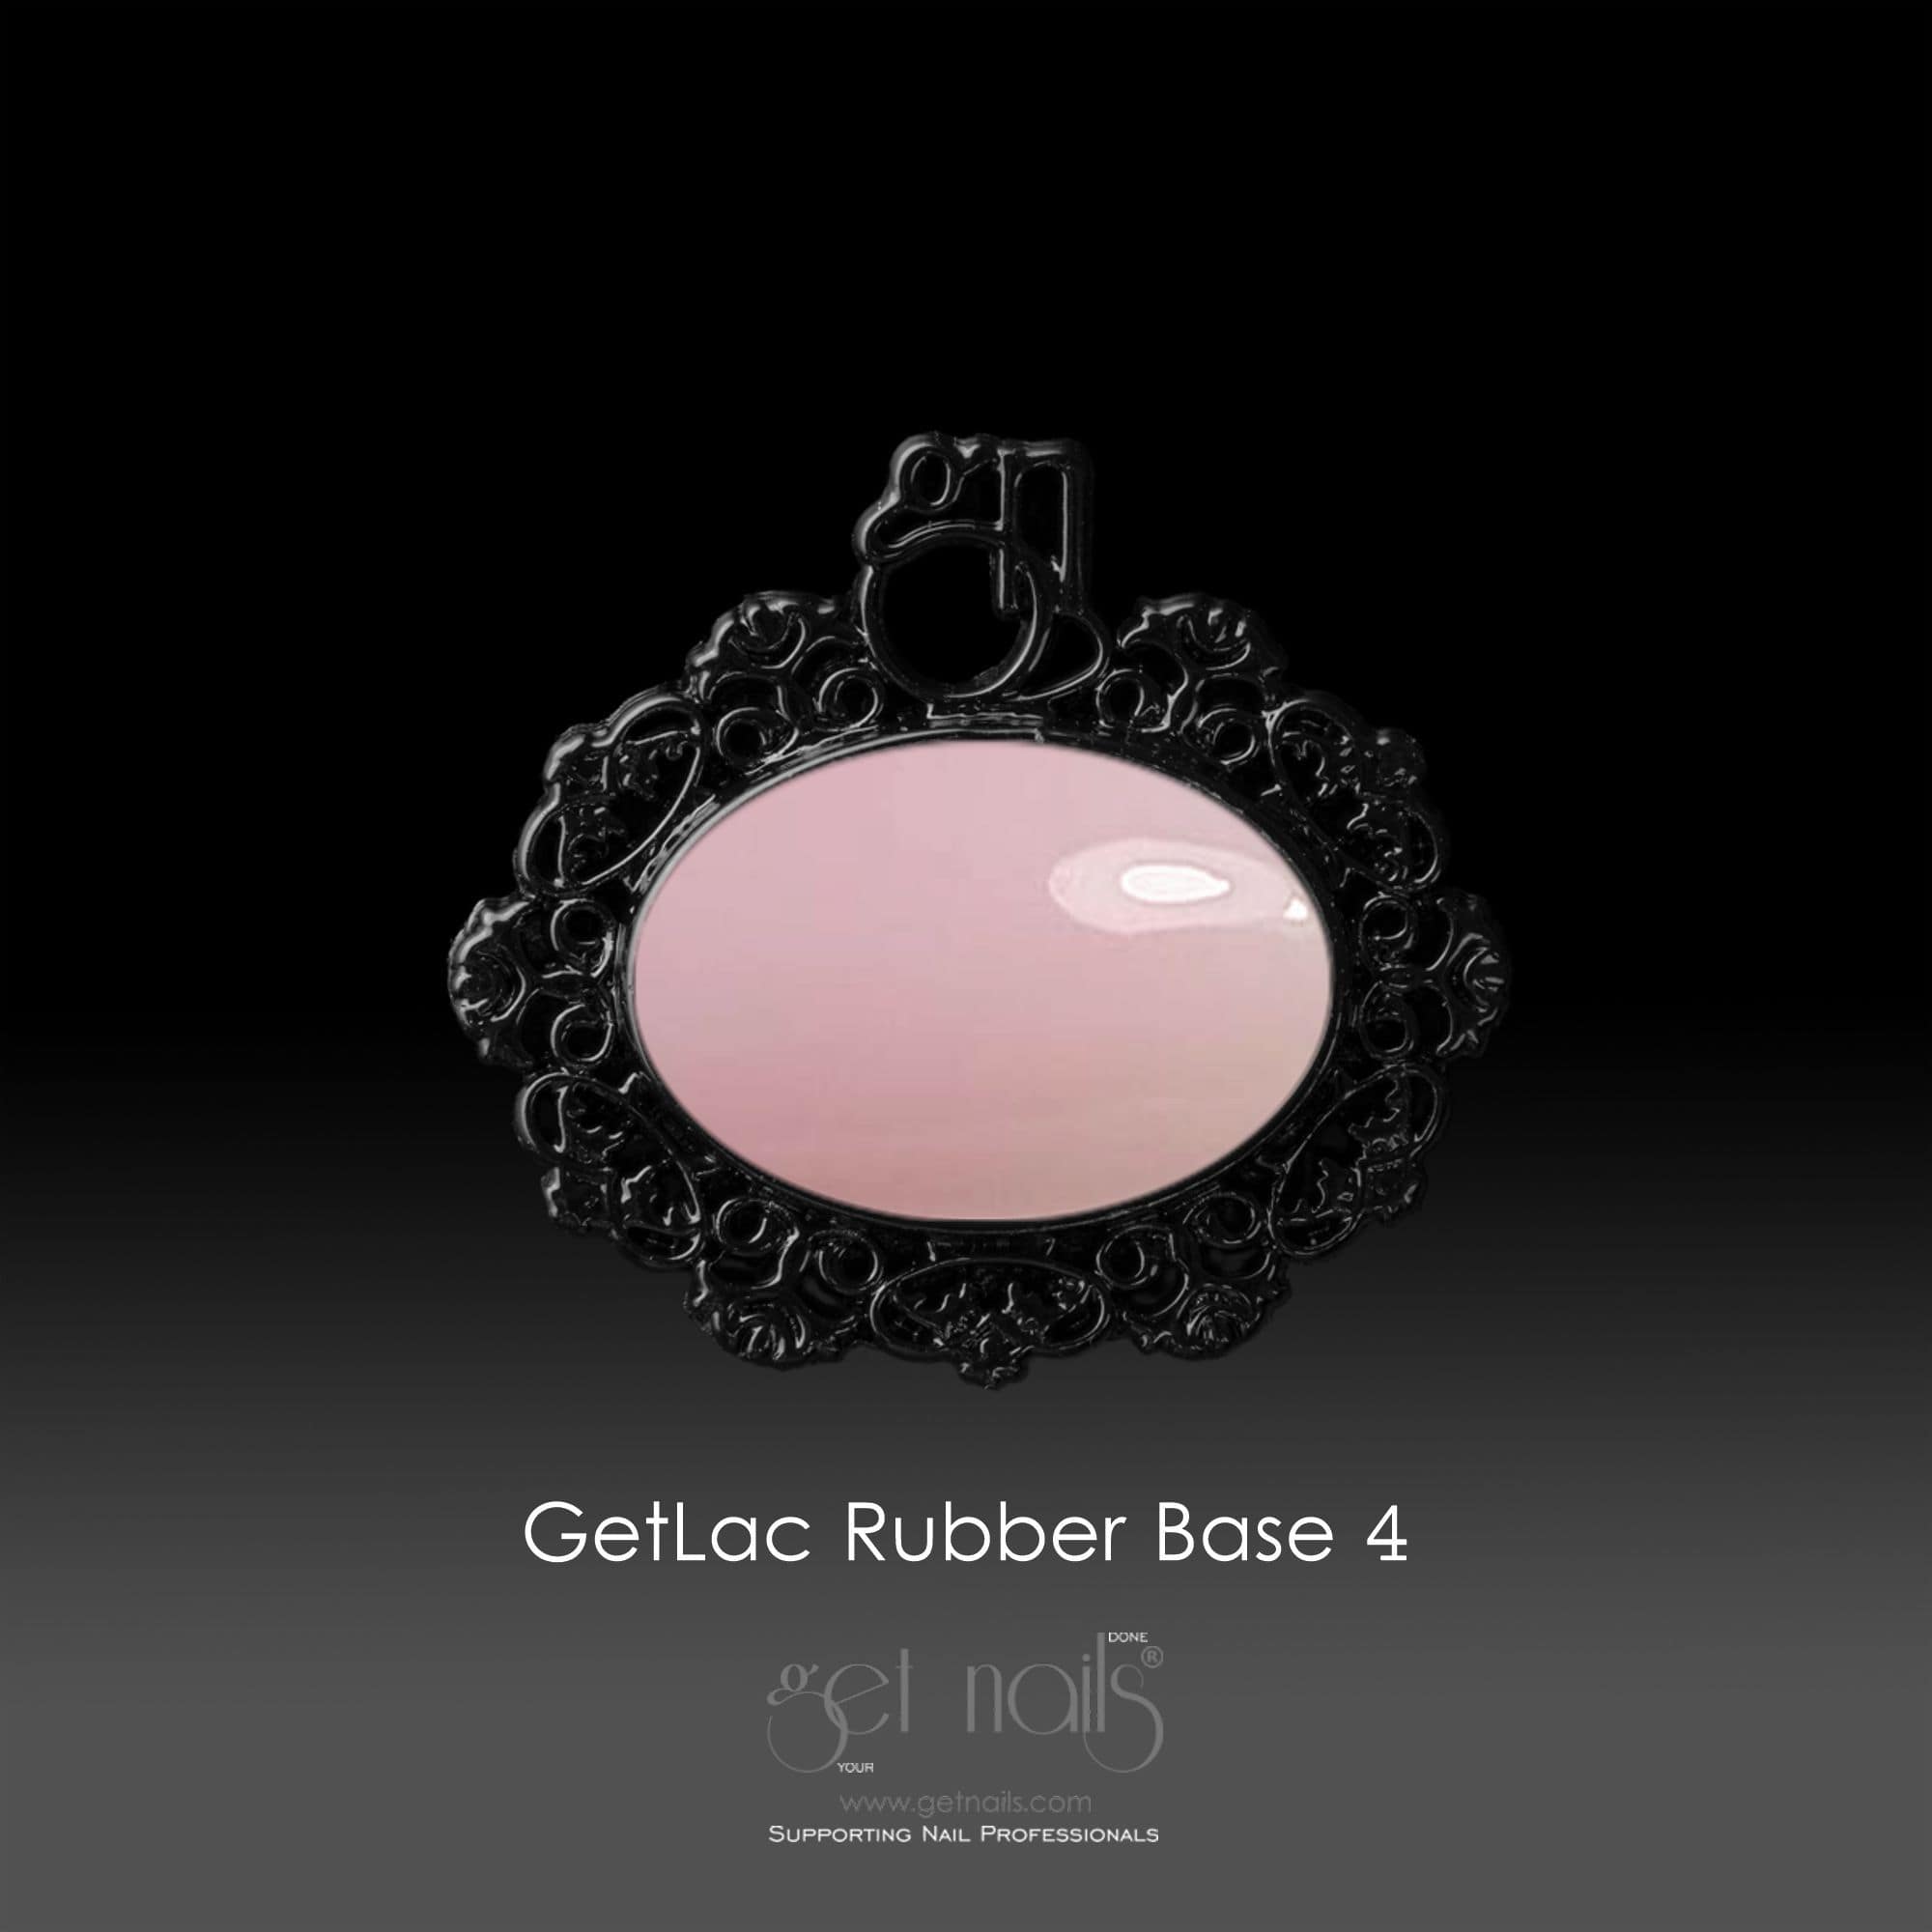 Get Nails Austria - GetLac Rubber Base 4 15g